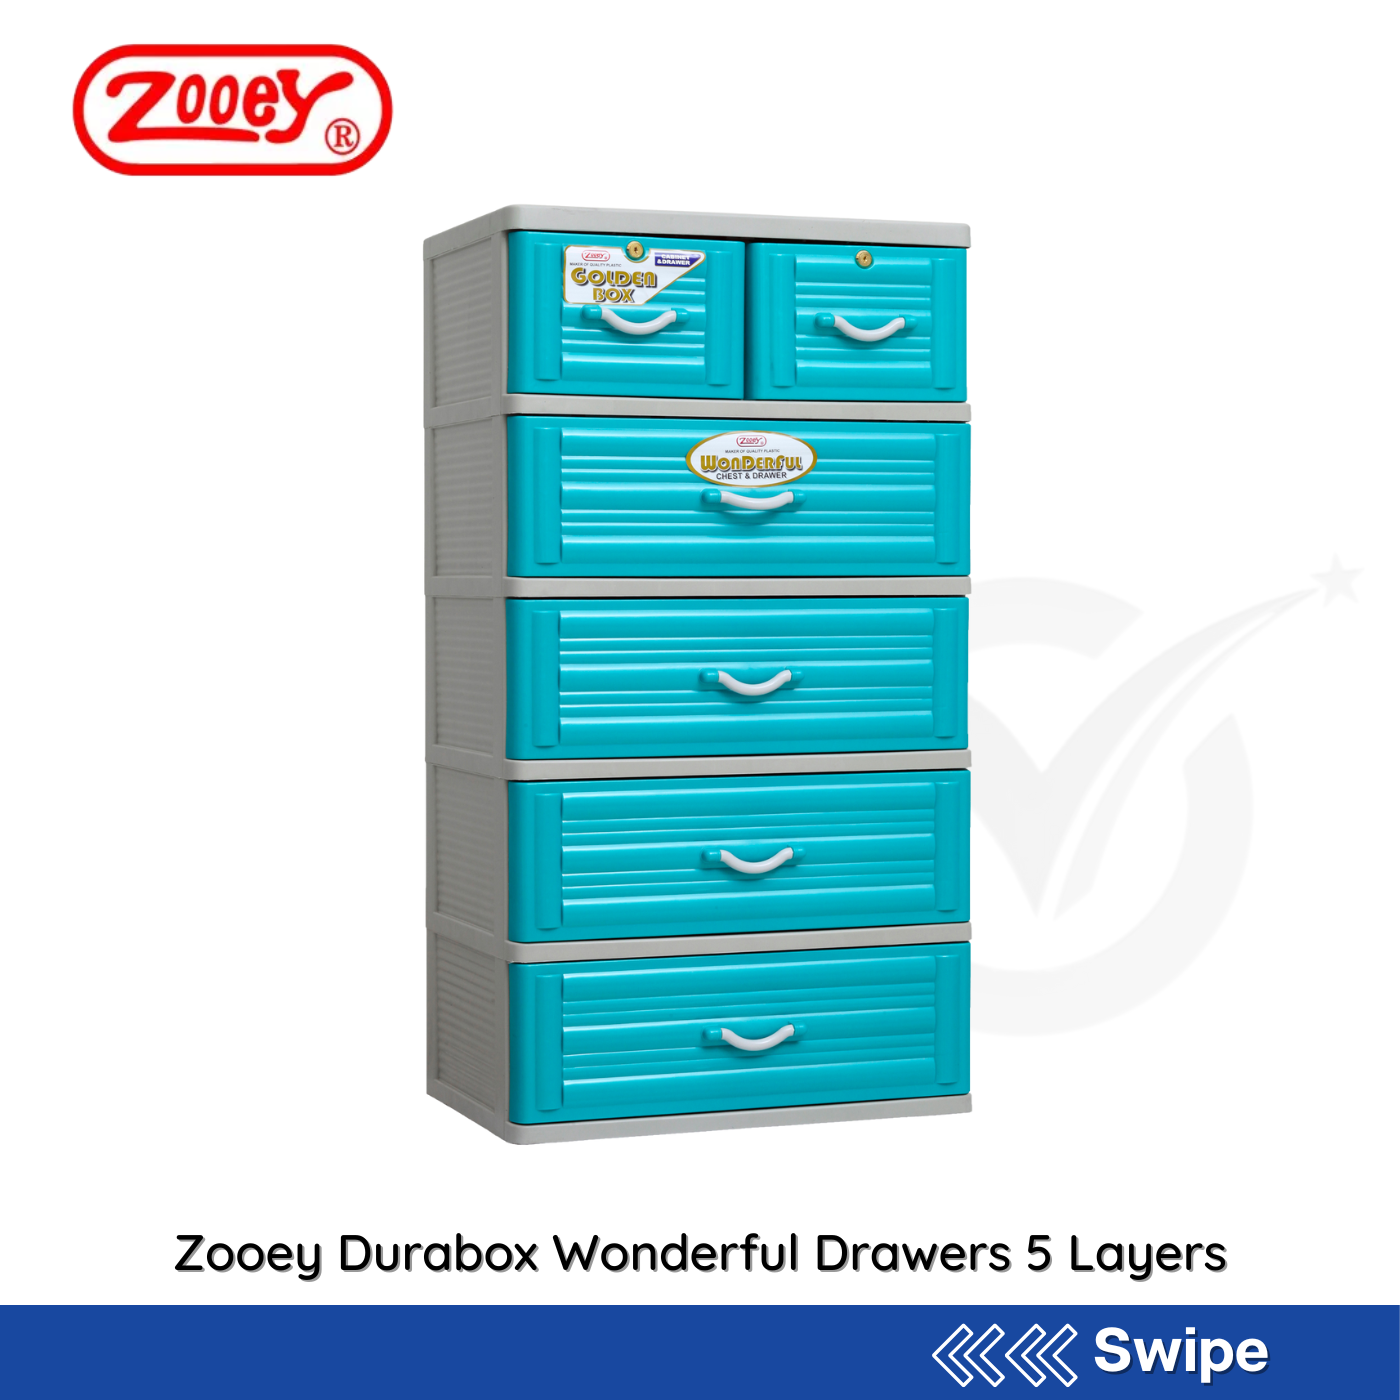 Zooey Durabox Wonderful Drawers 5 Layers - People's Choice Marketing